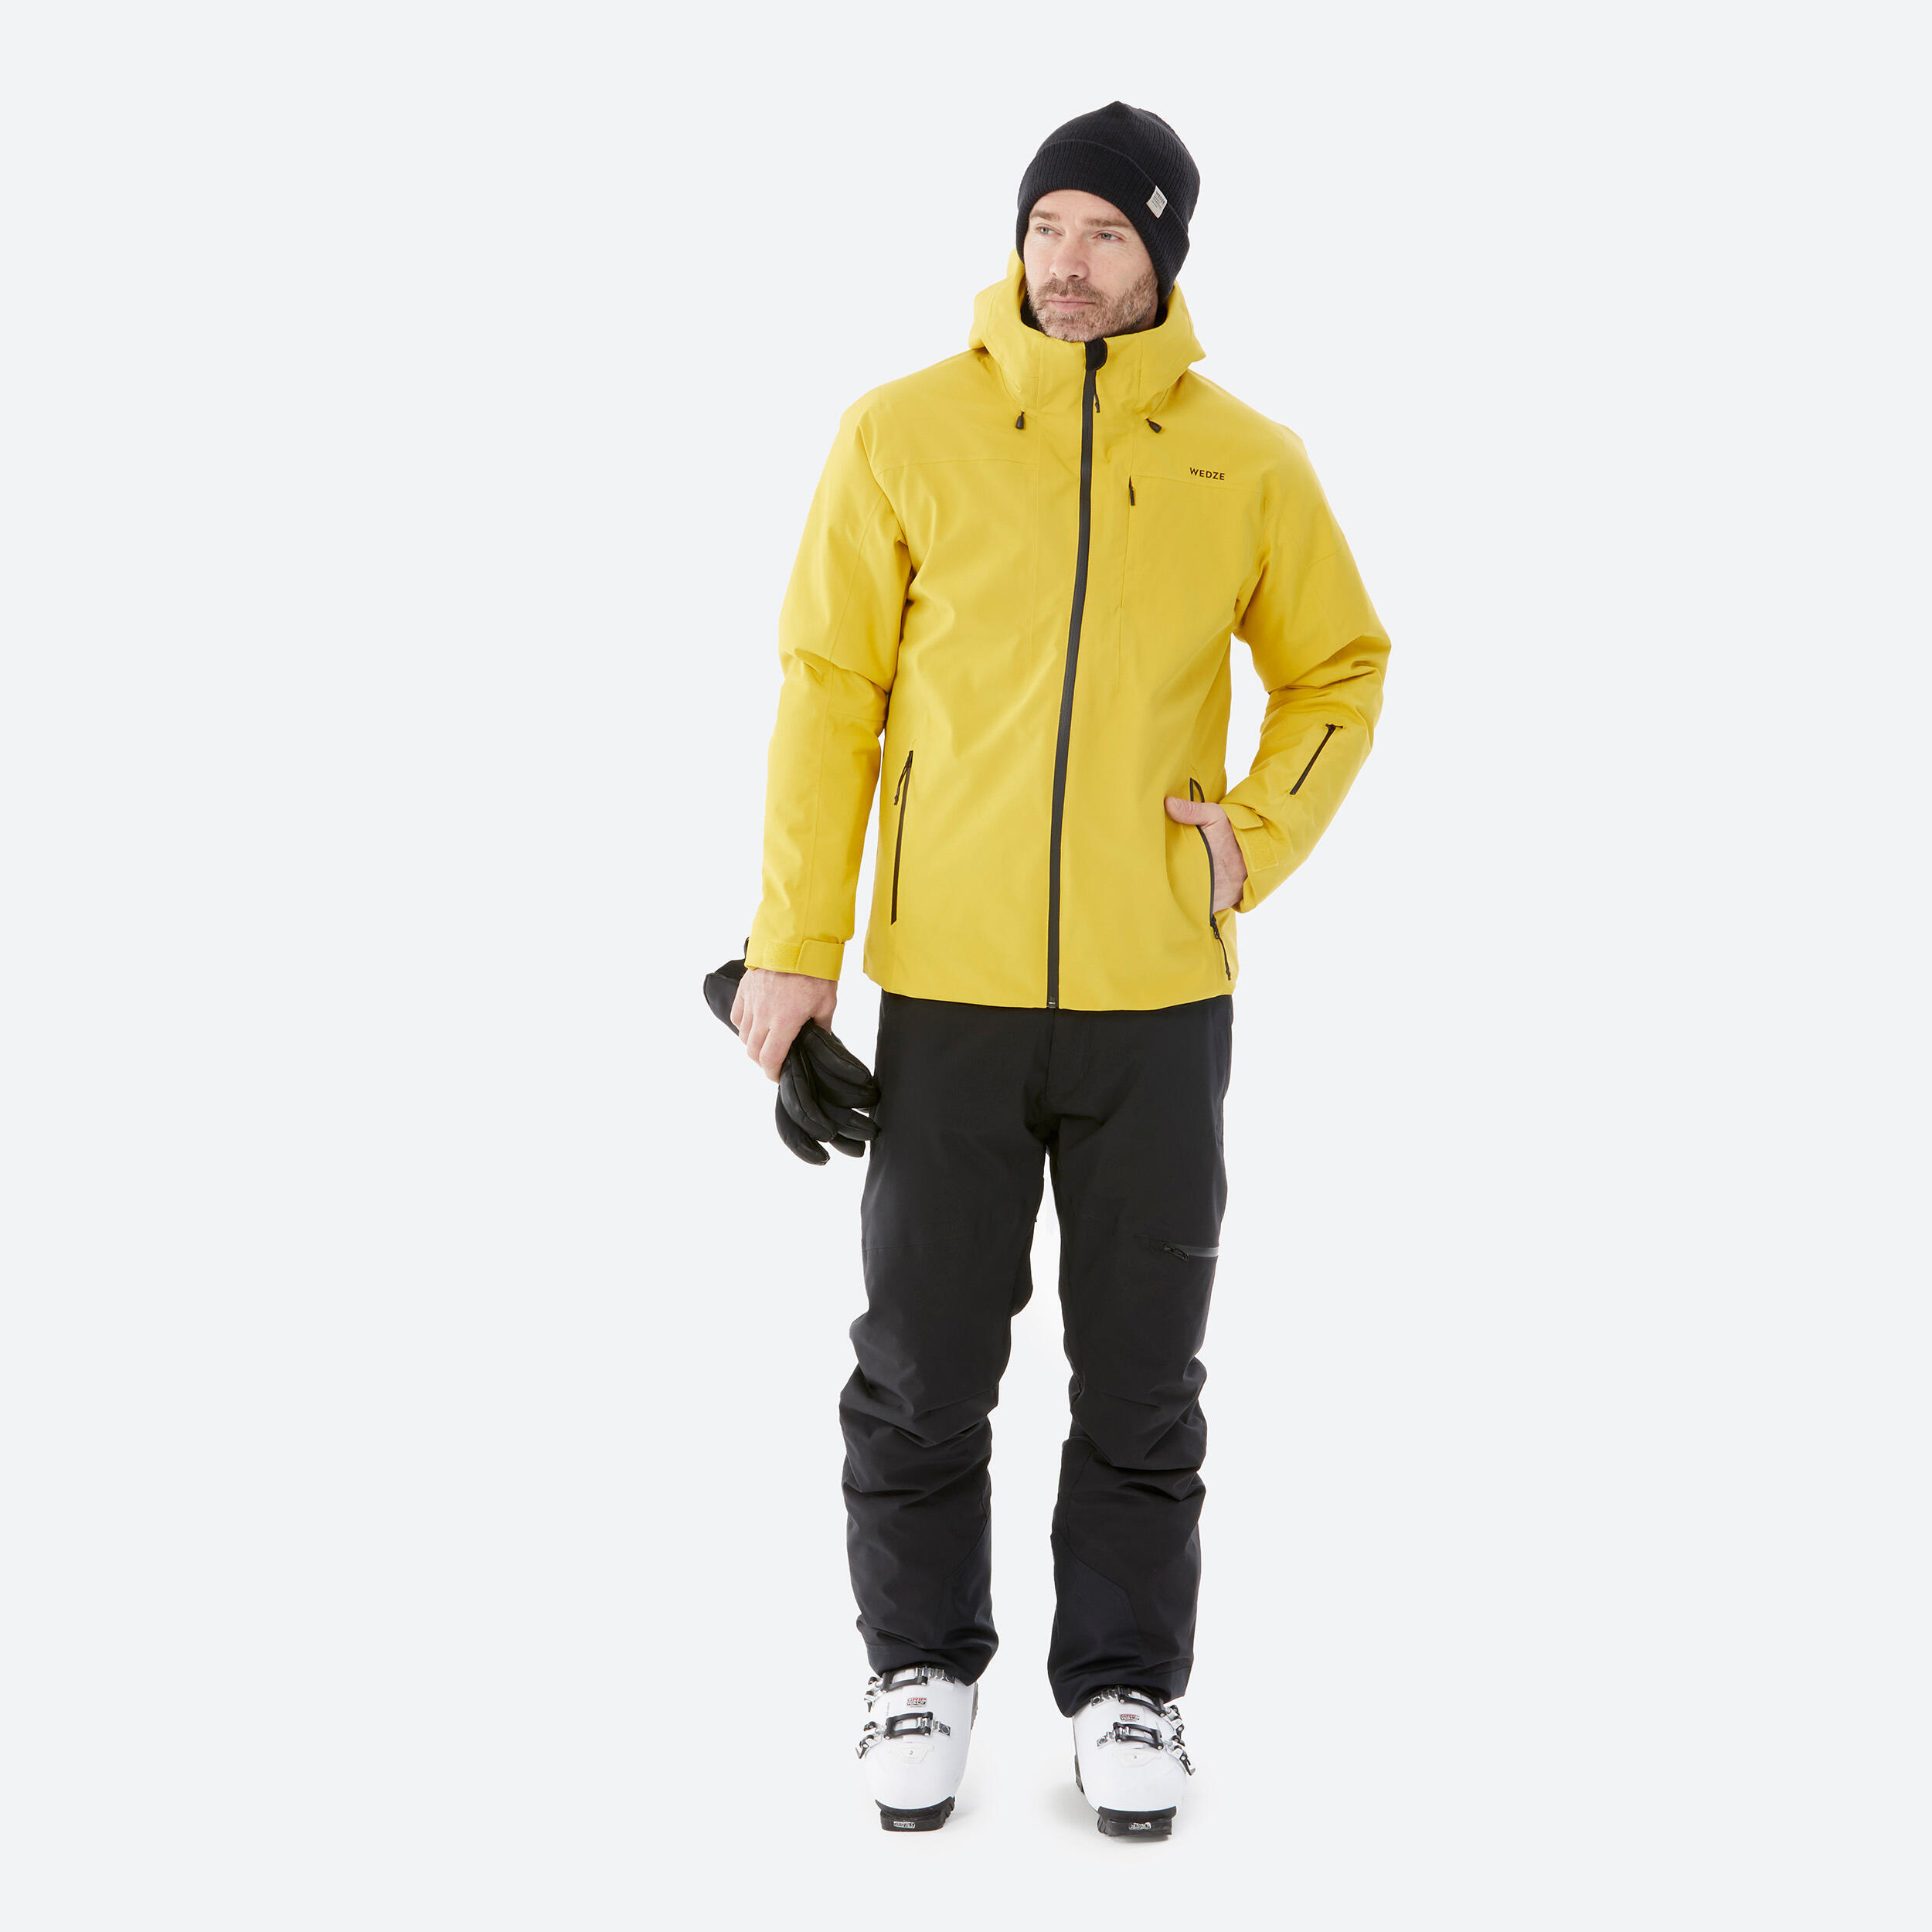 Men’s Warm Ski Jacket 500 - Yellow 6/13